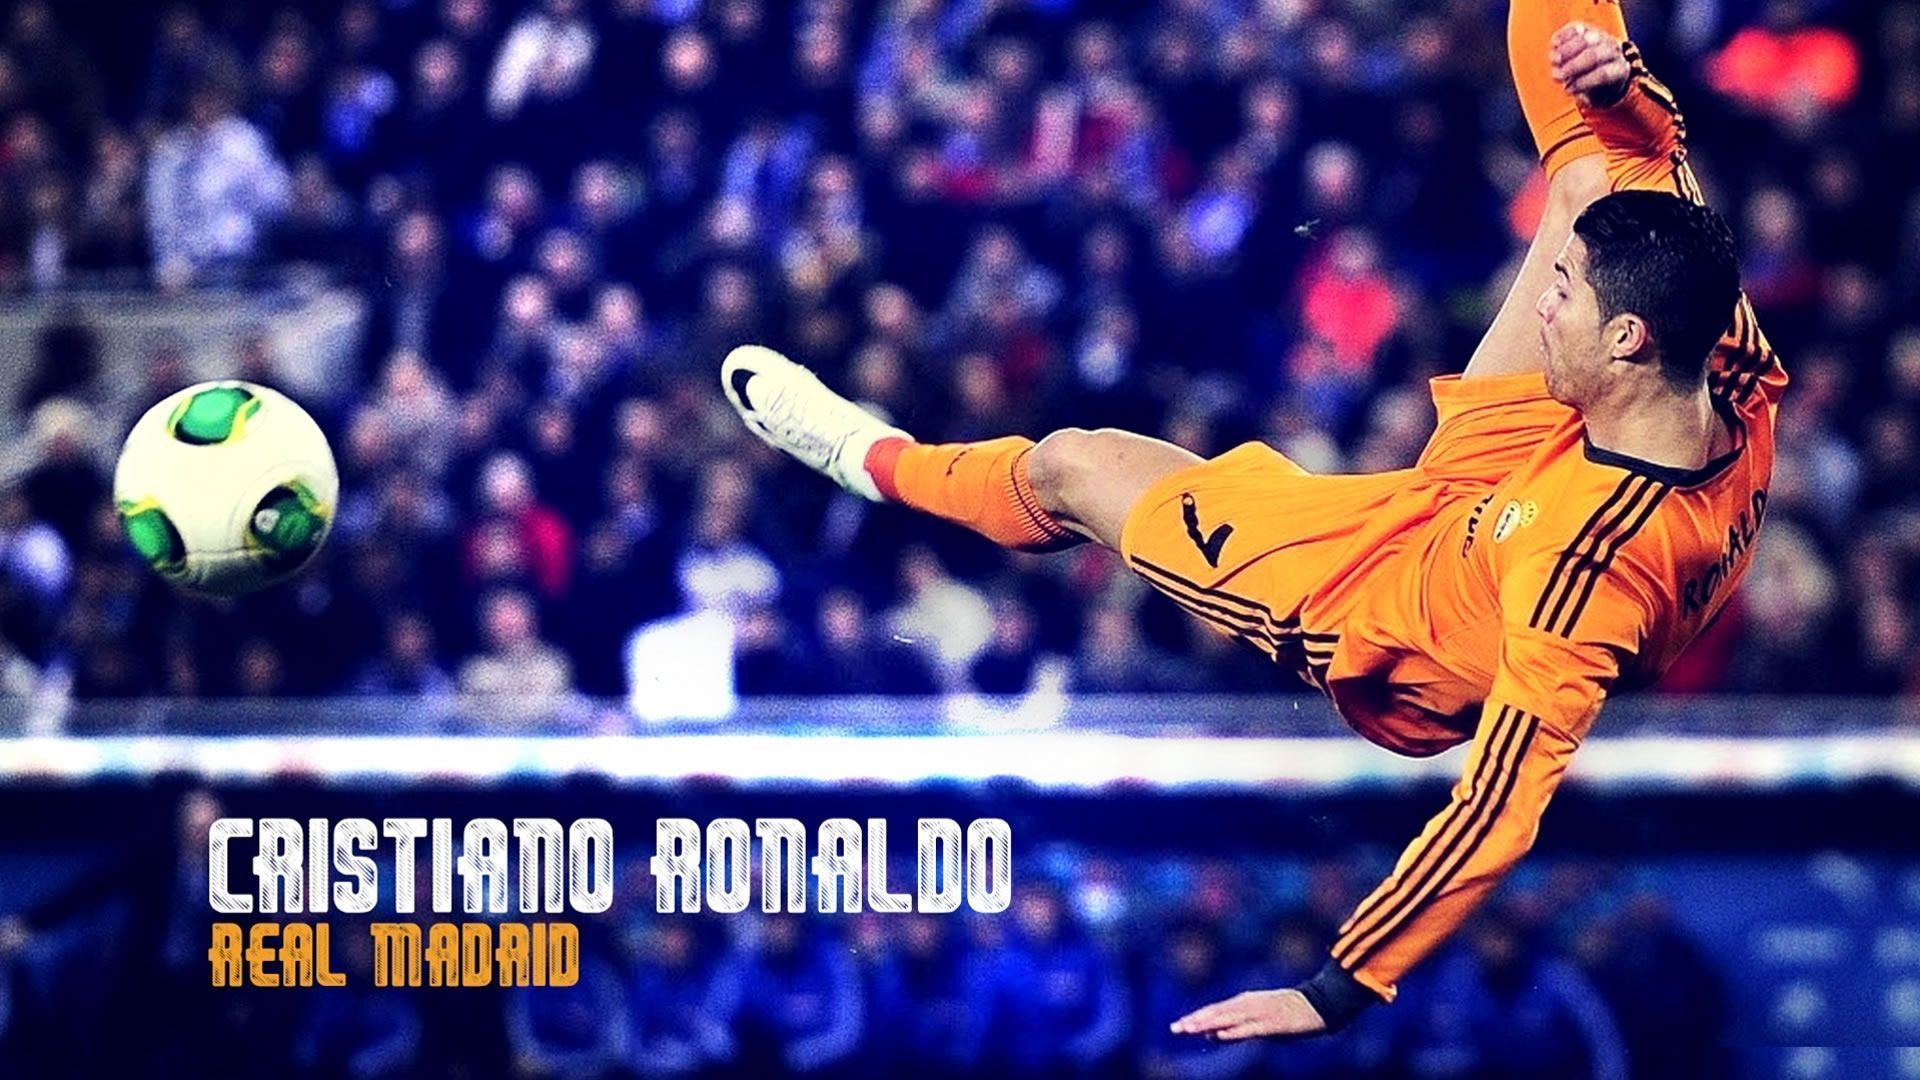 Cristiano Ronaldo bicycle kick wallpaper - Cristiano Ronaldo